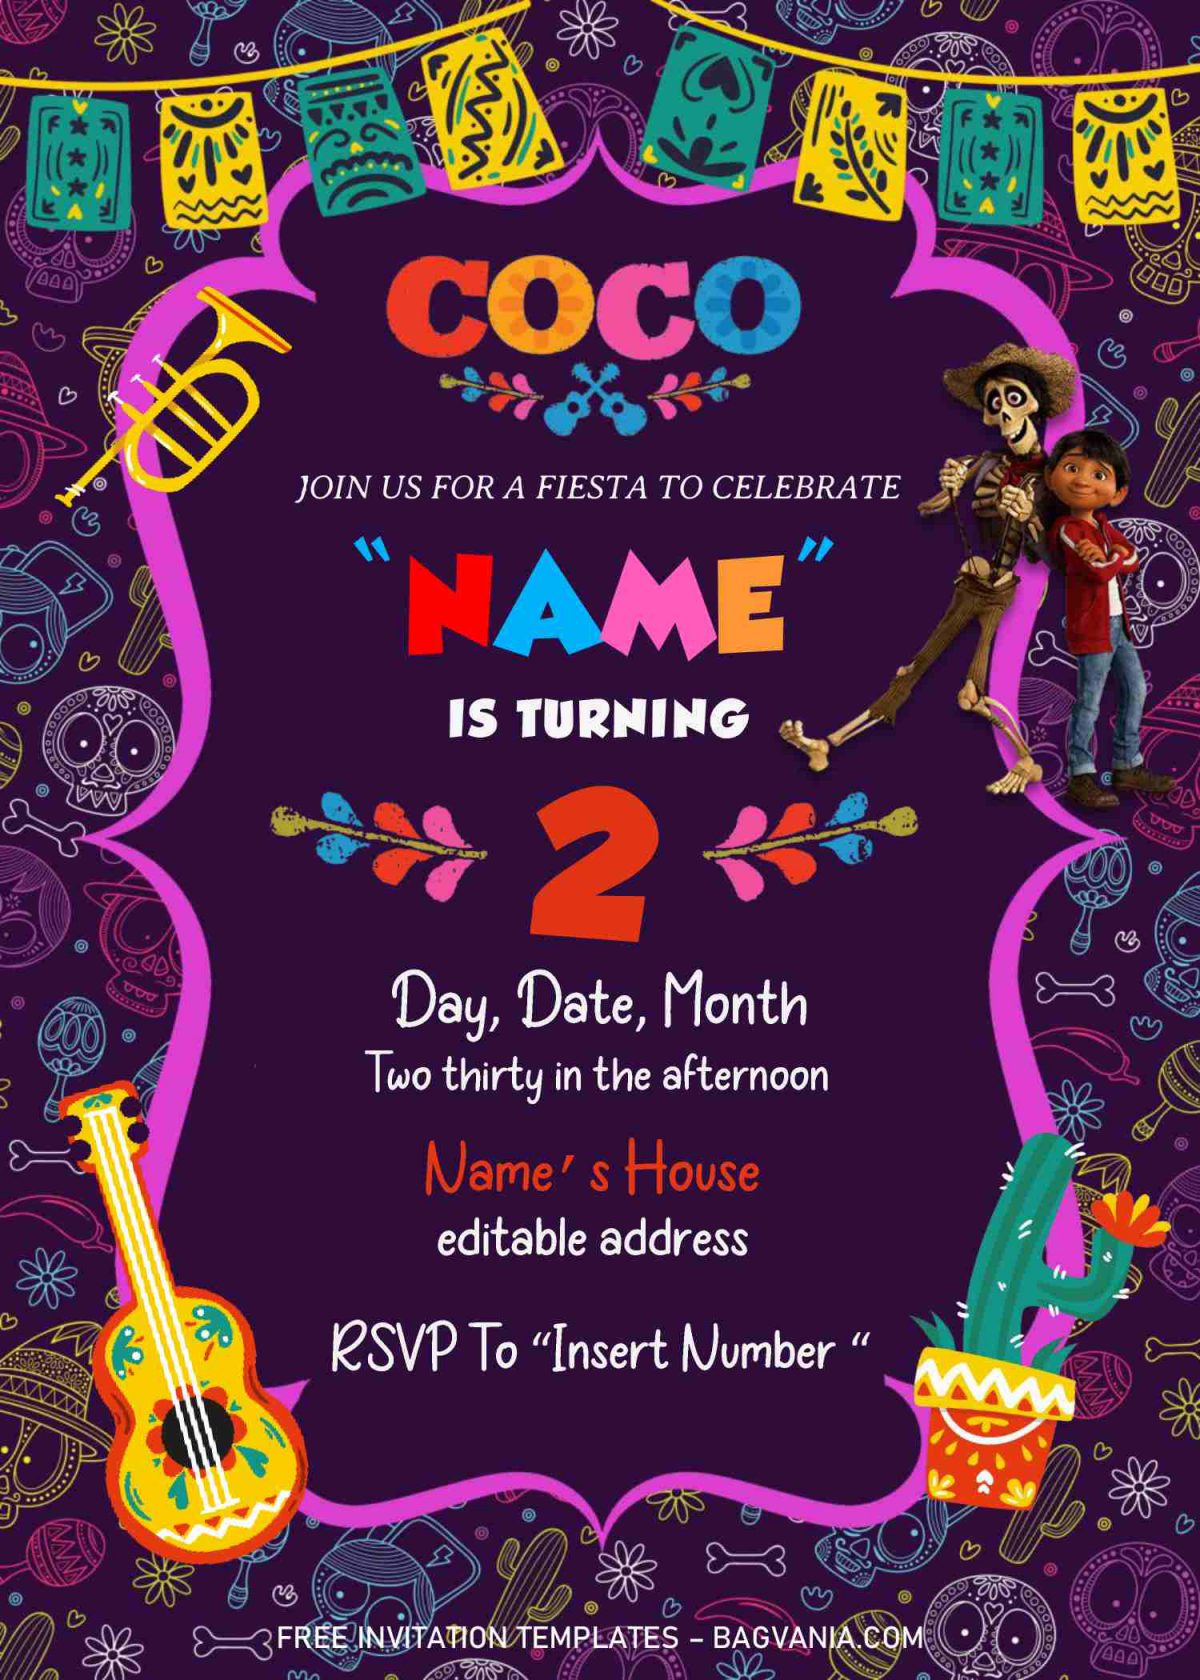 Coco Pixar Birthday Invitation Templates - Editable With MS Word and has portrait orientation